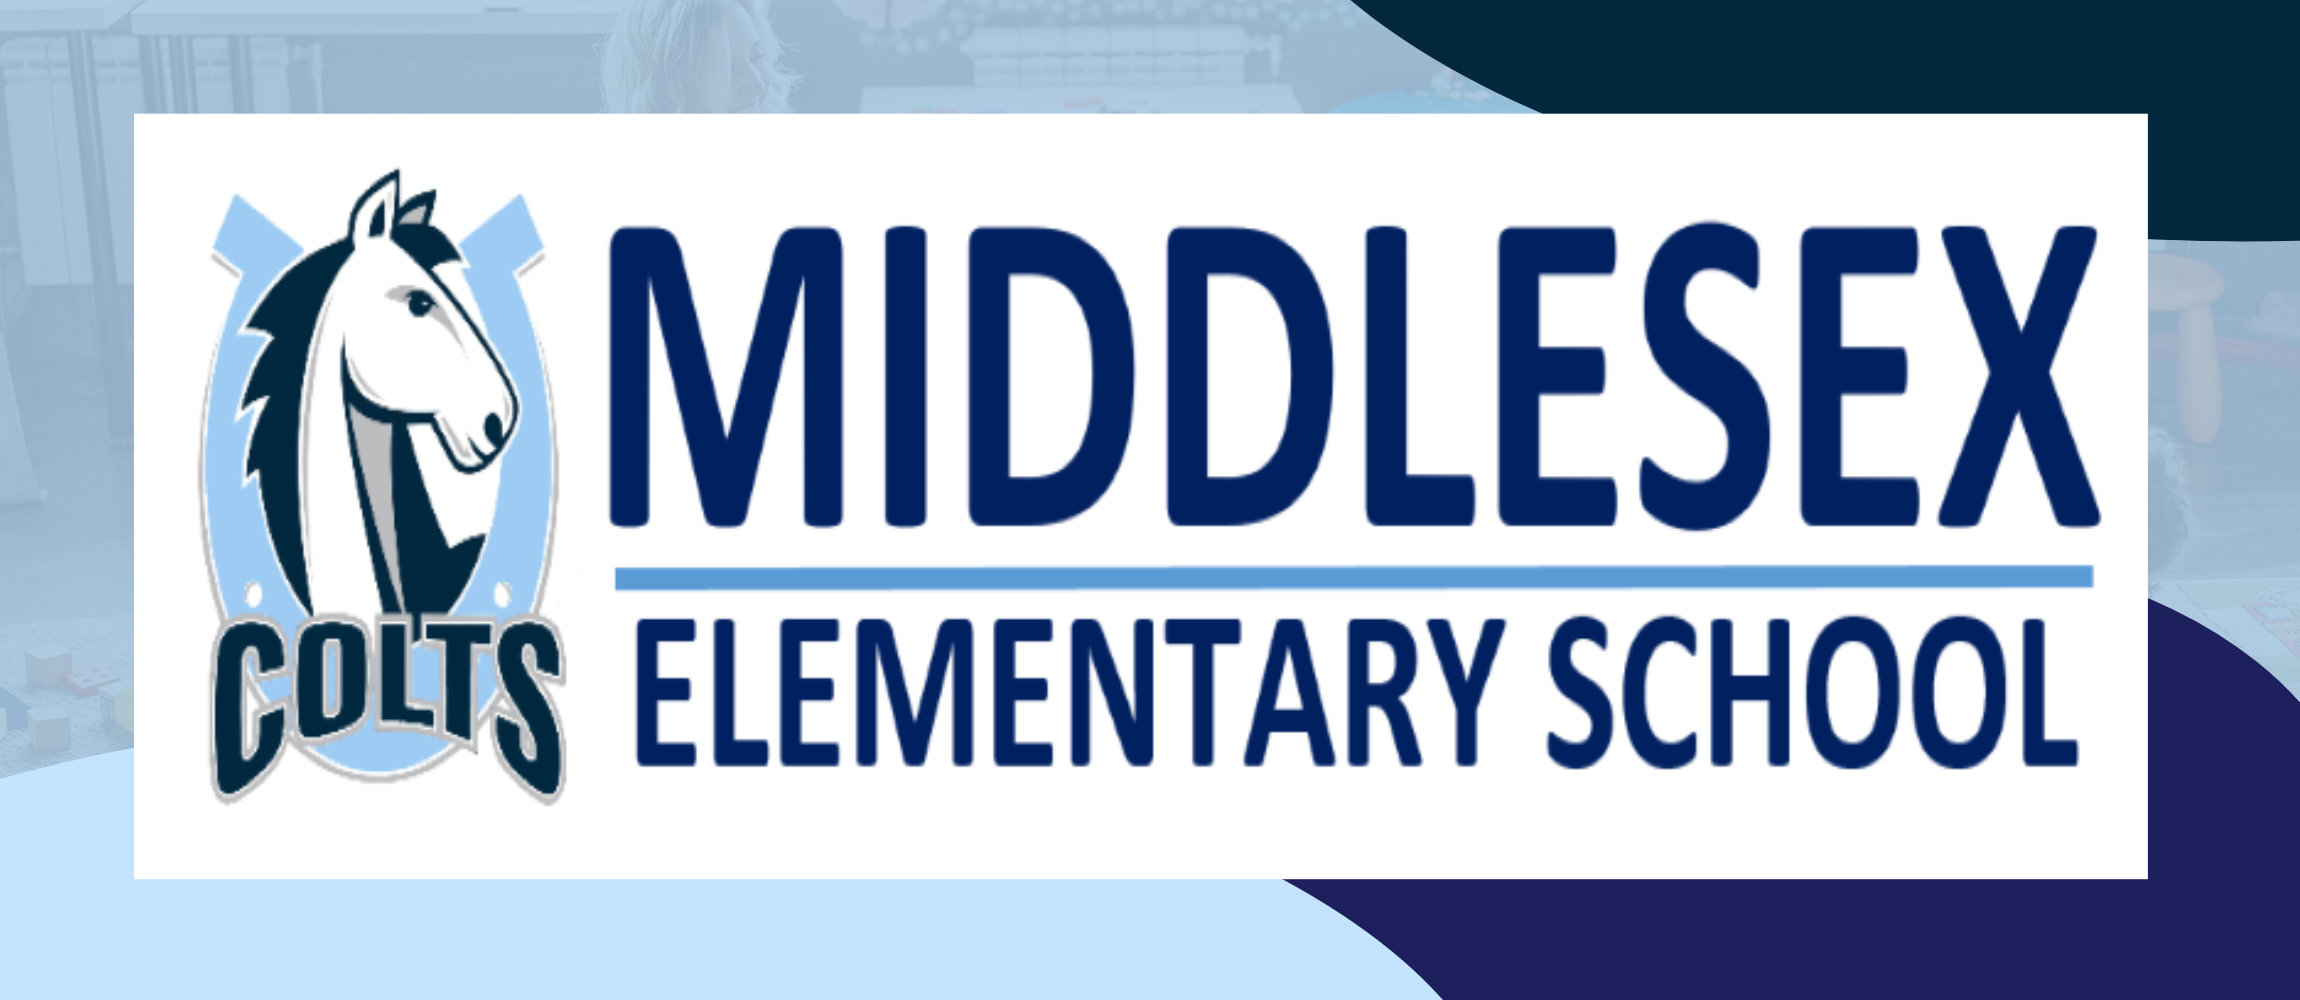 Middlesex Elementary School